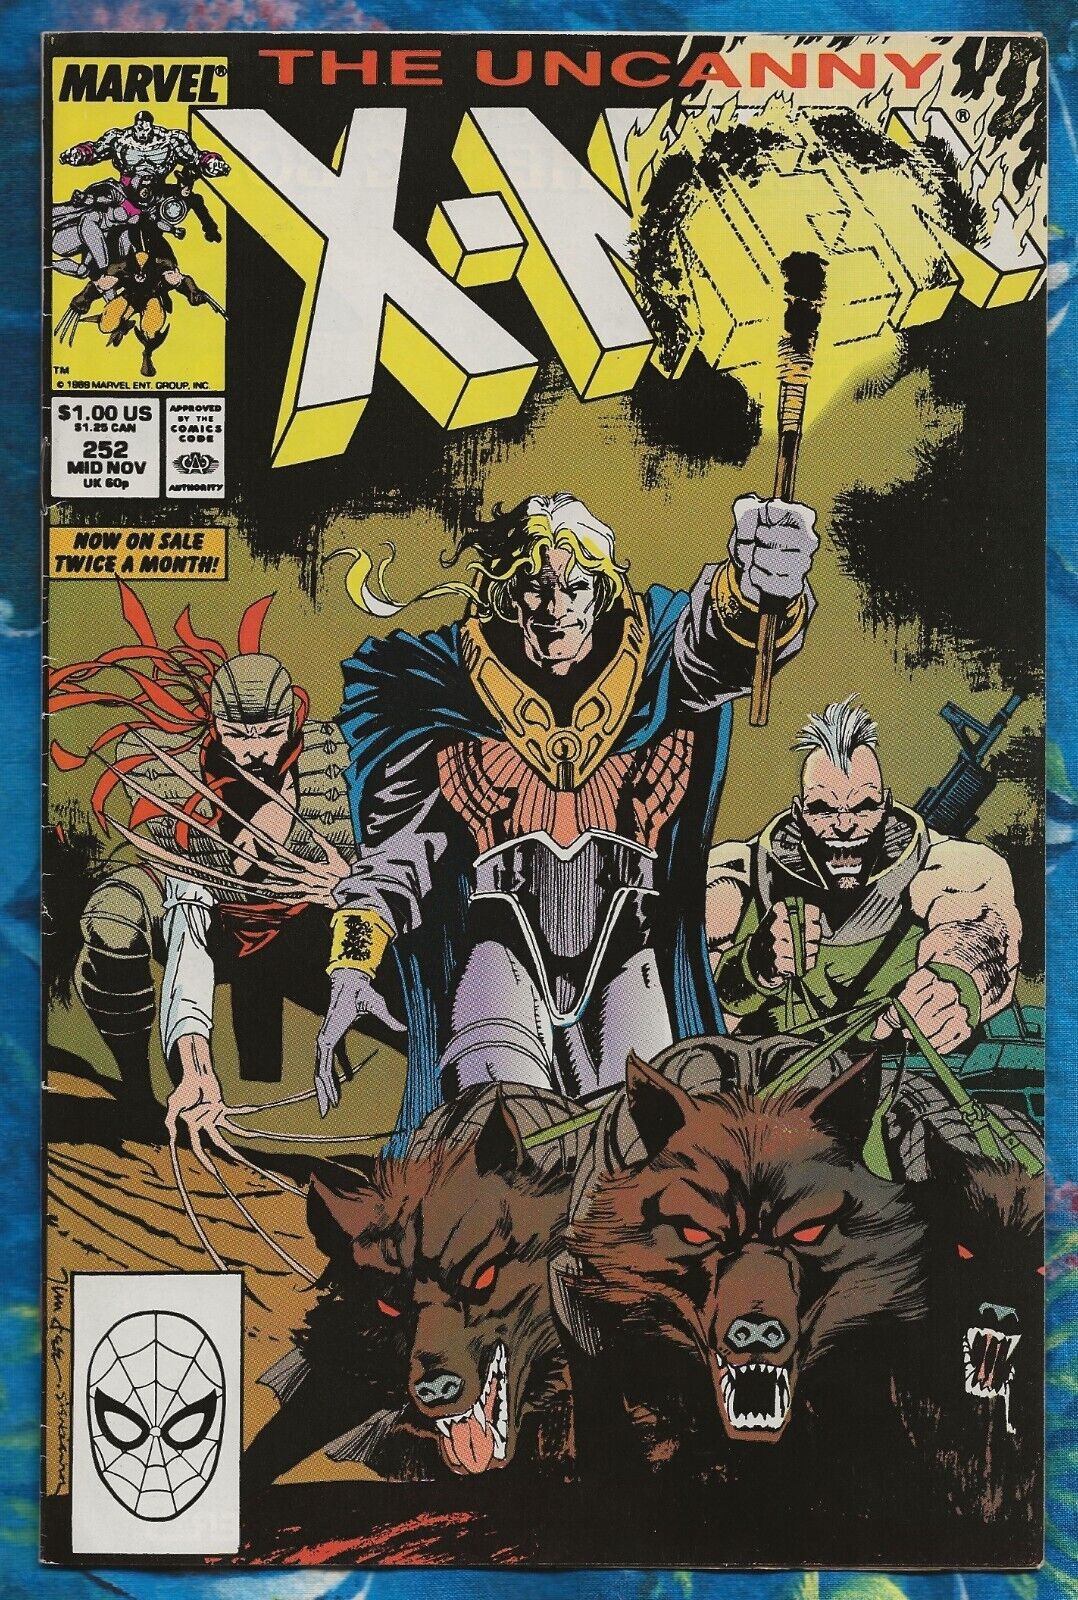 UNCANNY X-MEN #252 1989 Marvel comic, Jim Lee cover art. 